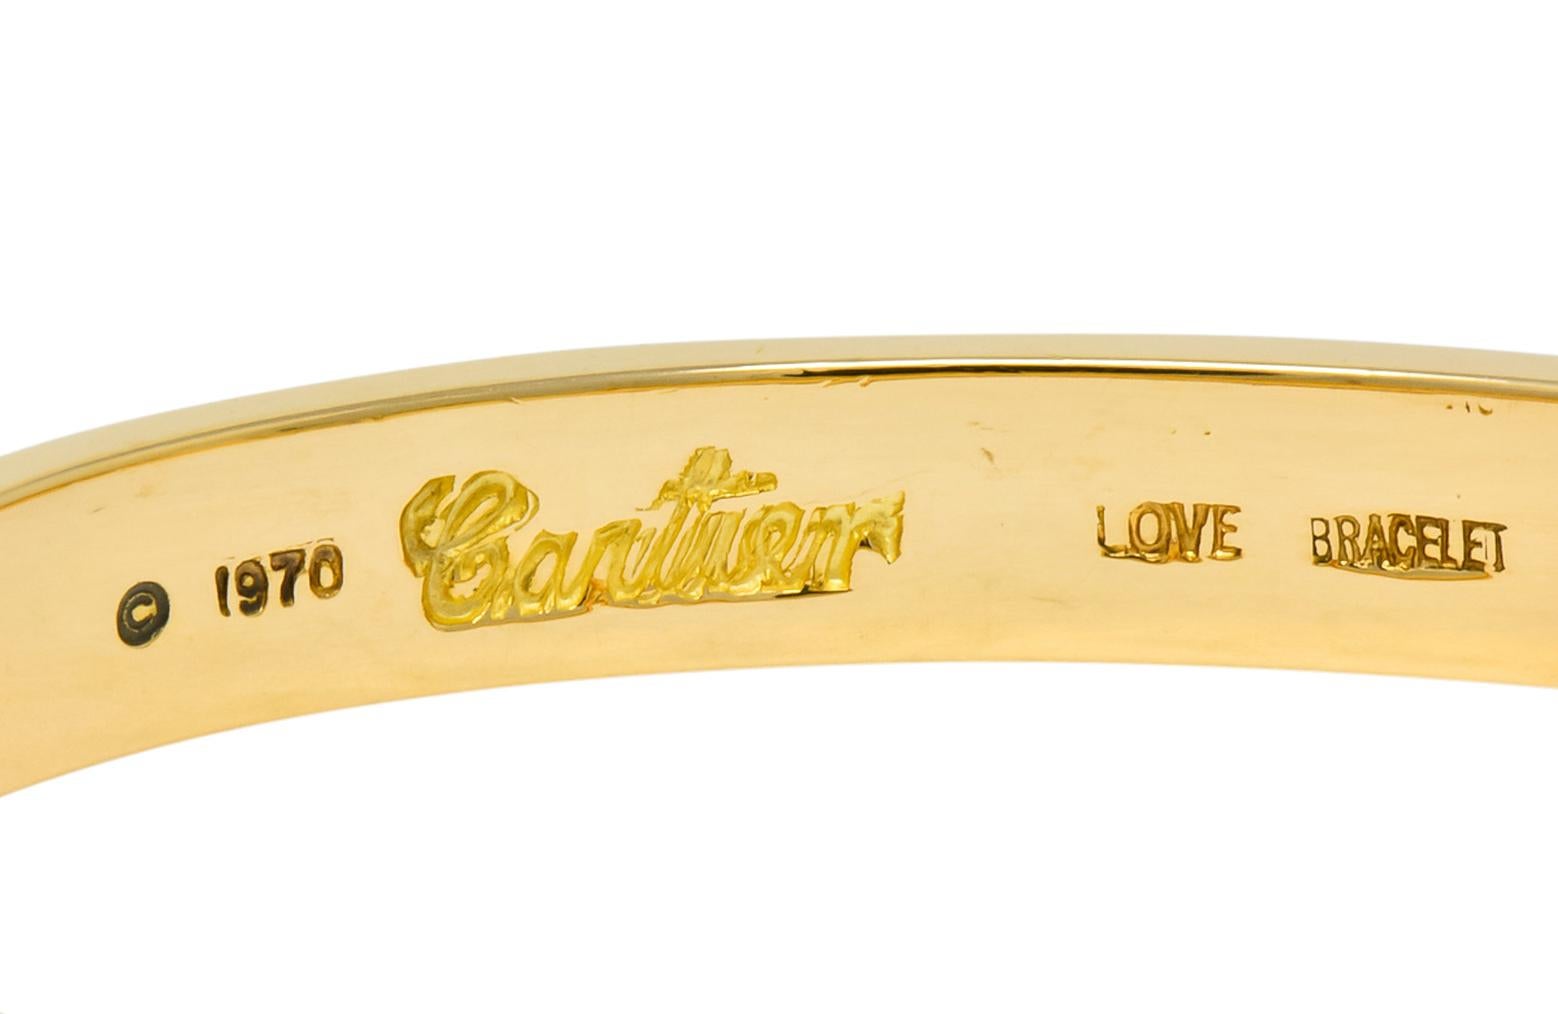 Cartier Aldo Cipullo 1970 Rose Gold 18 Karat Love Bangle 1